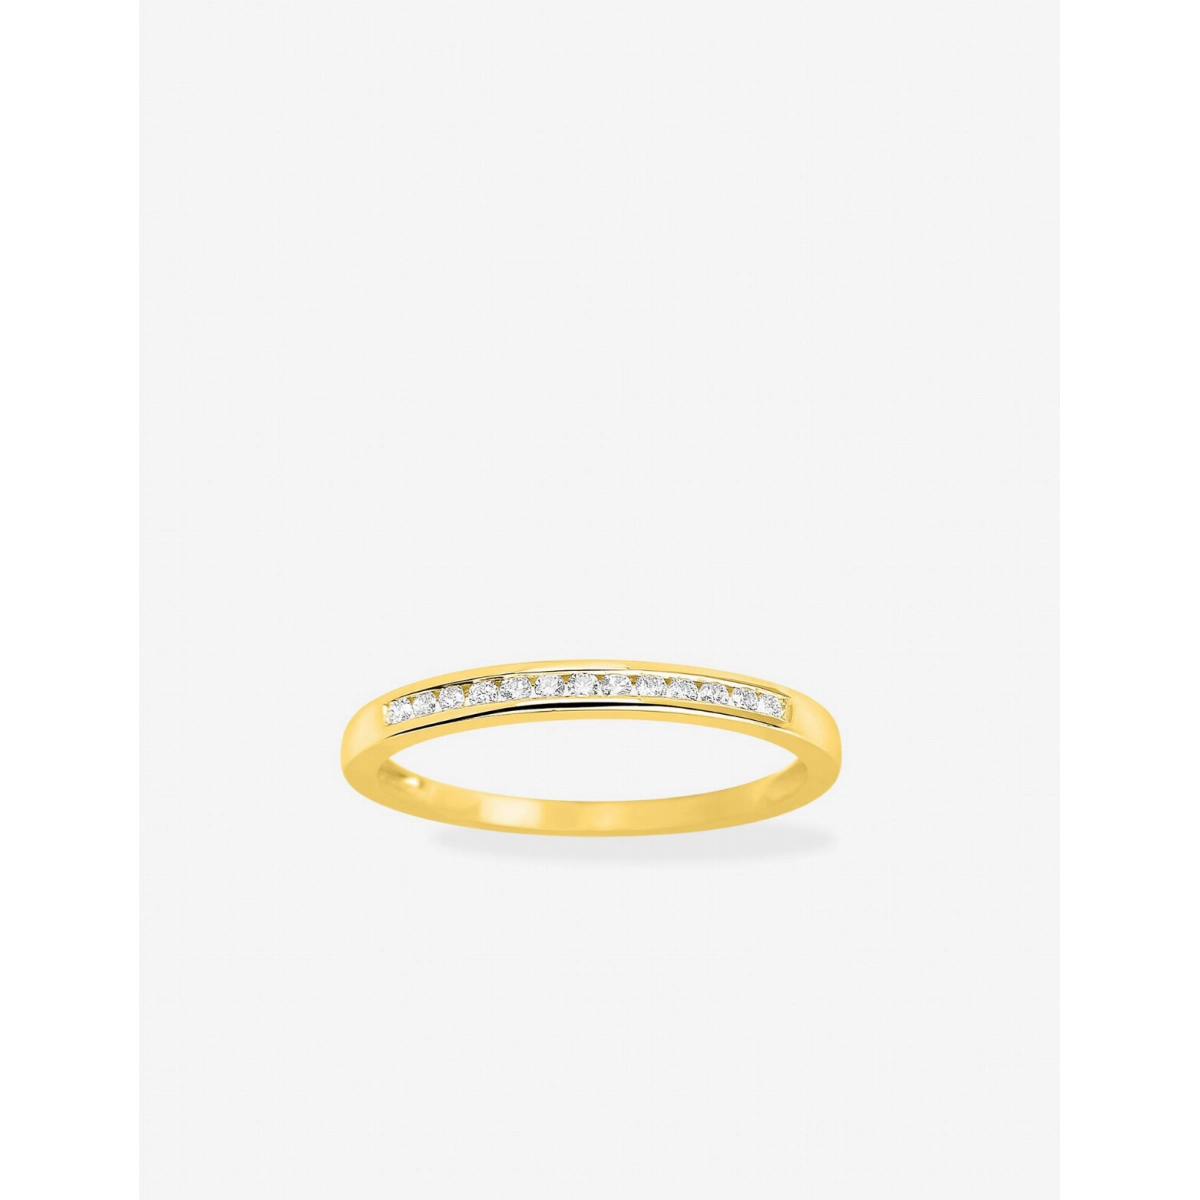 Wedding ring diam 0.10ct GHP1P2 18K YG Lua Blanca  2.4938.19 - Size 55